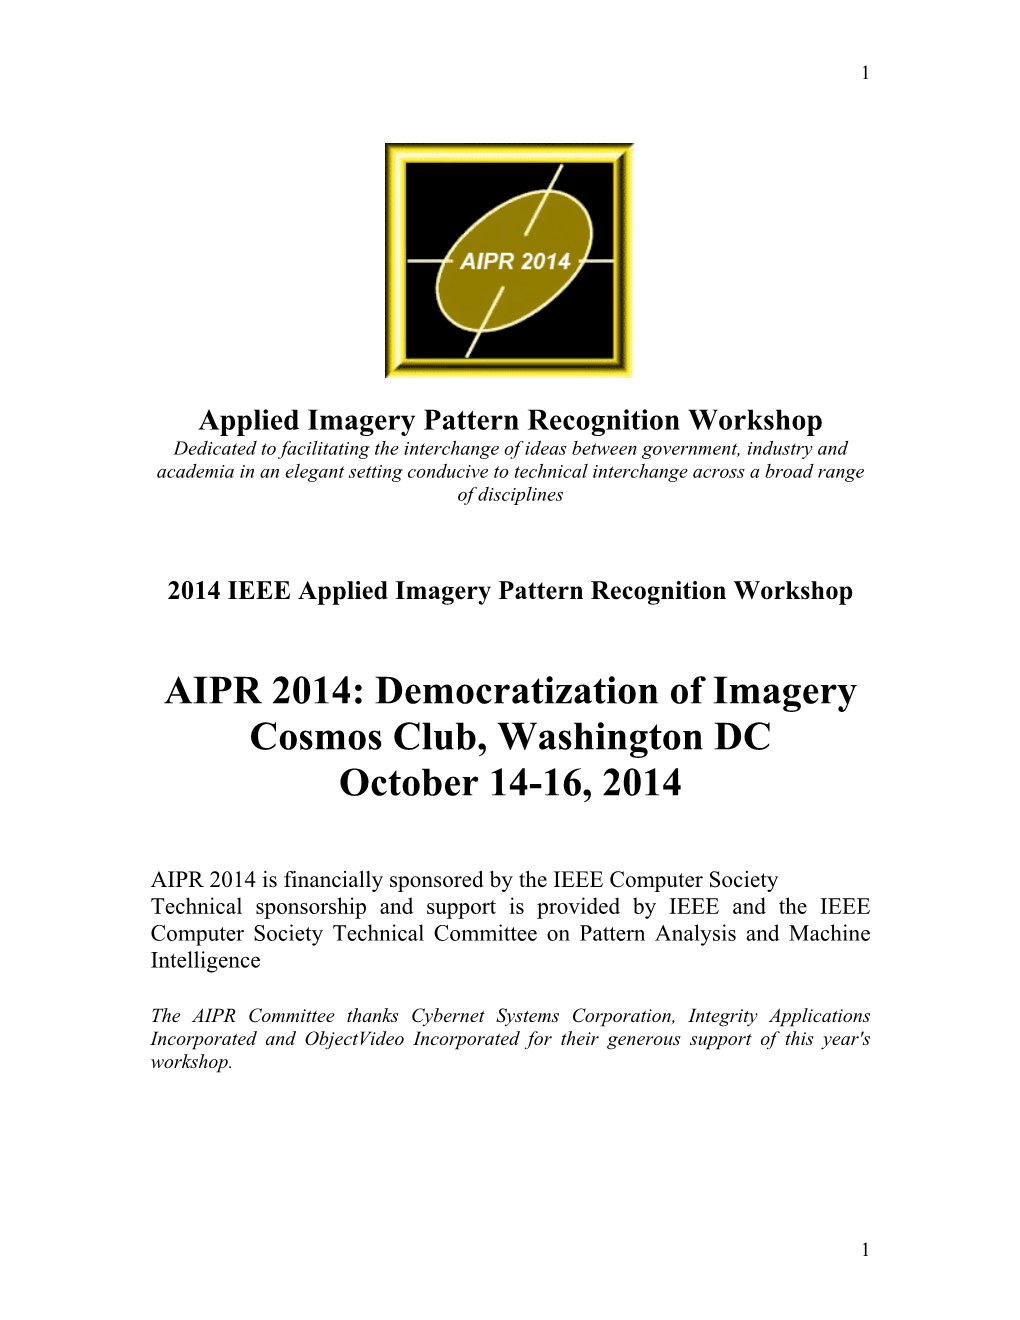 AIPR 2014: Democratization of Imagery Cosmos Club, Washington DC October 14-16, 2014